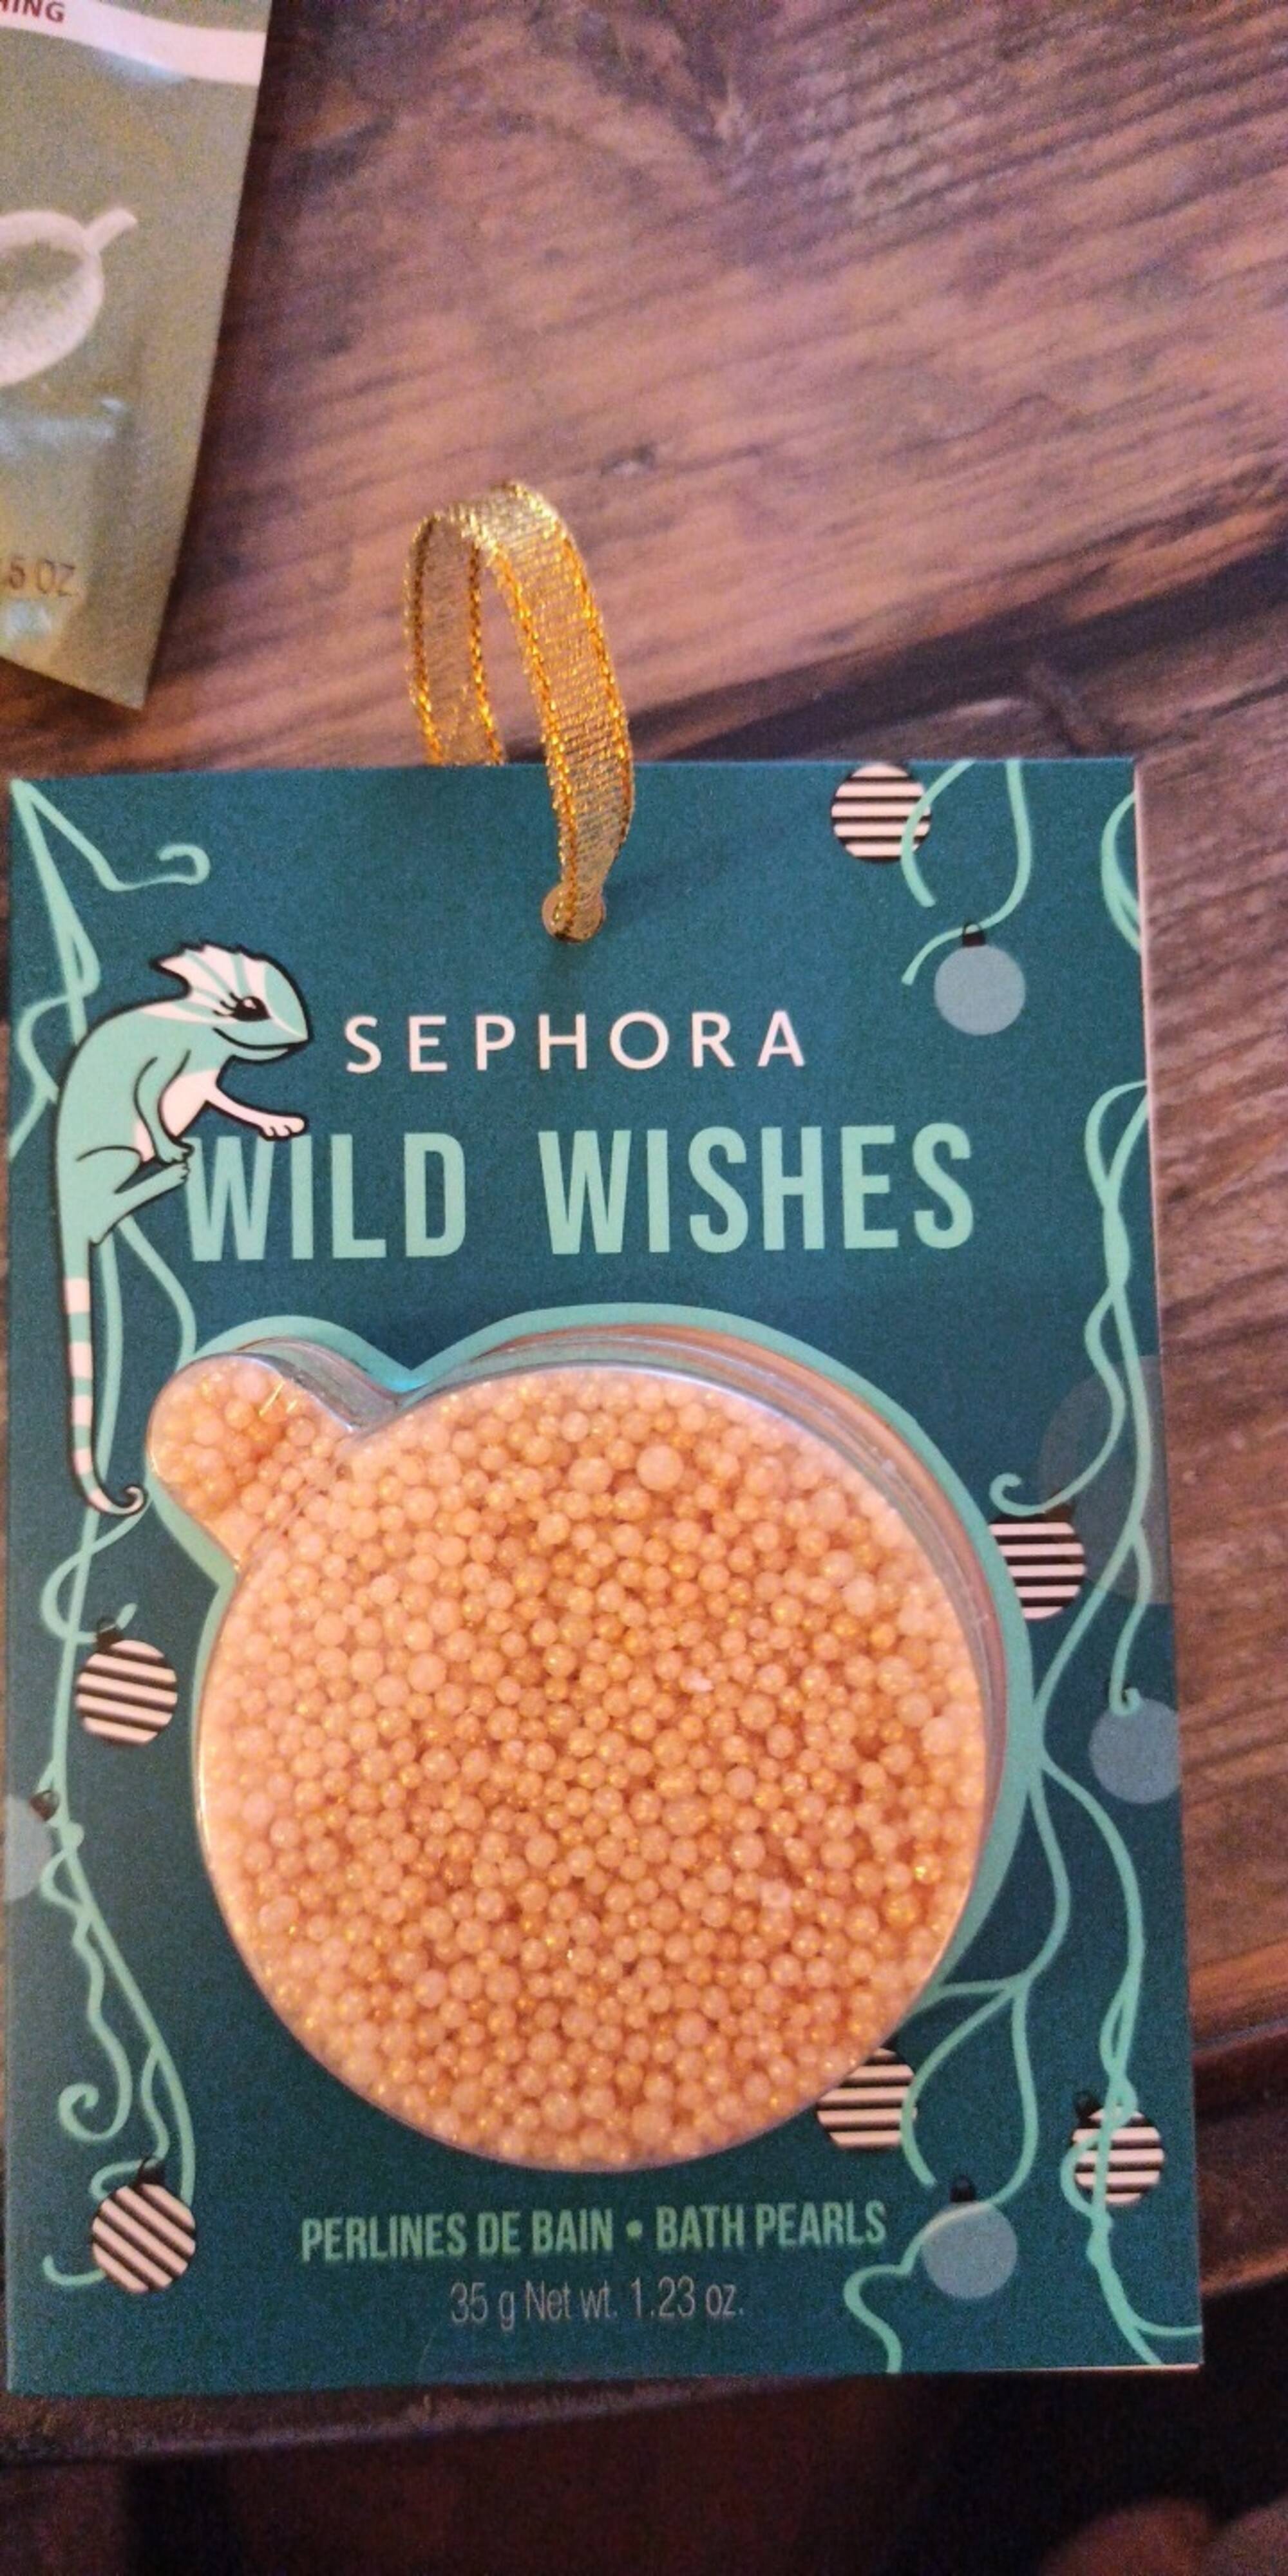 SEPHORA - Wild wishes - Perlines de bain